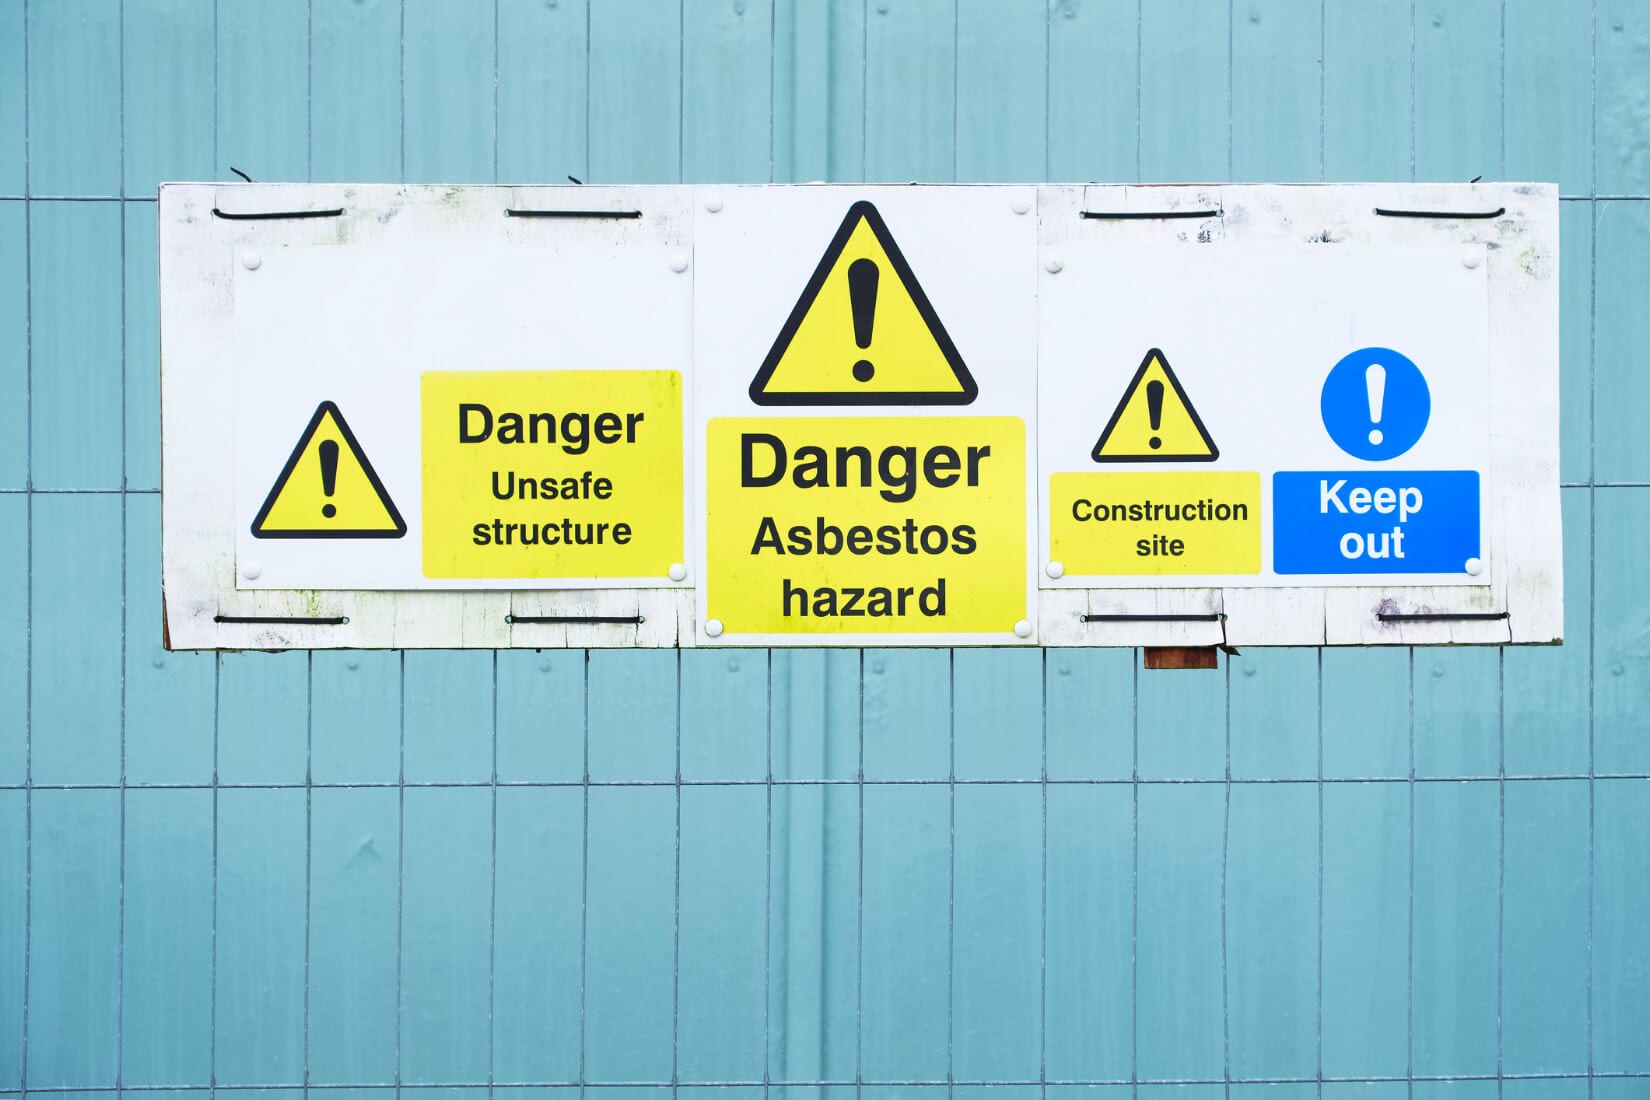 Asbestos hazard danger sign at construction site keep out.